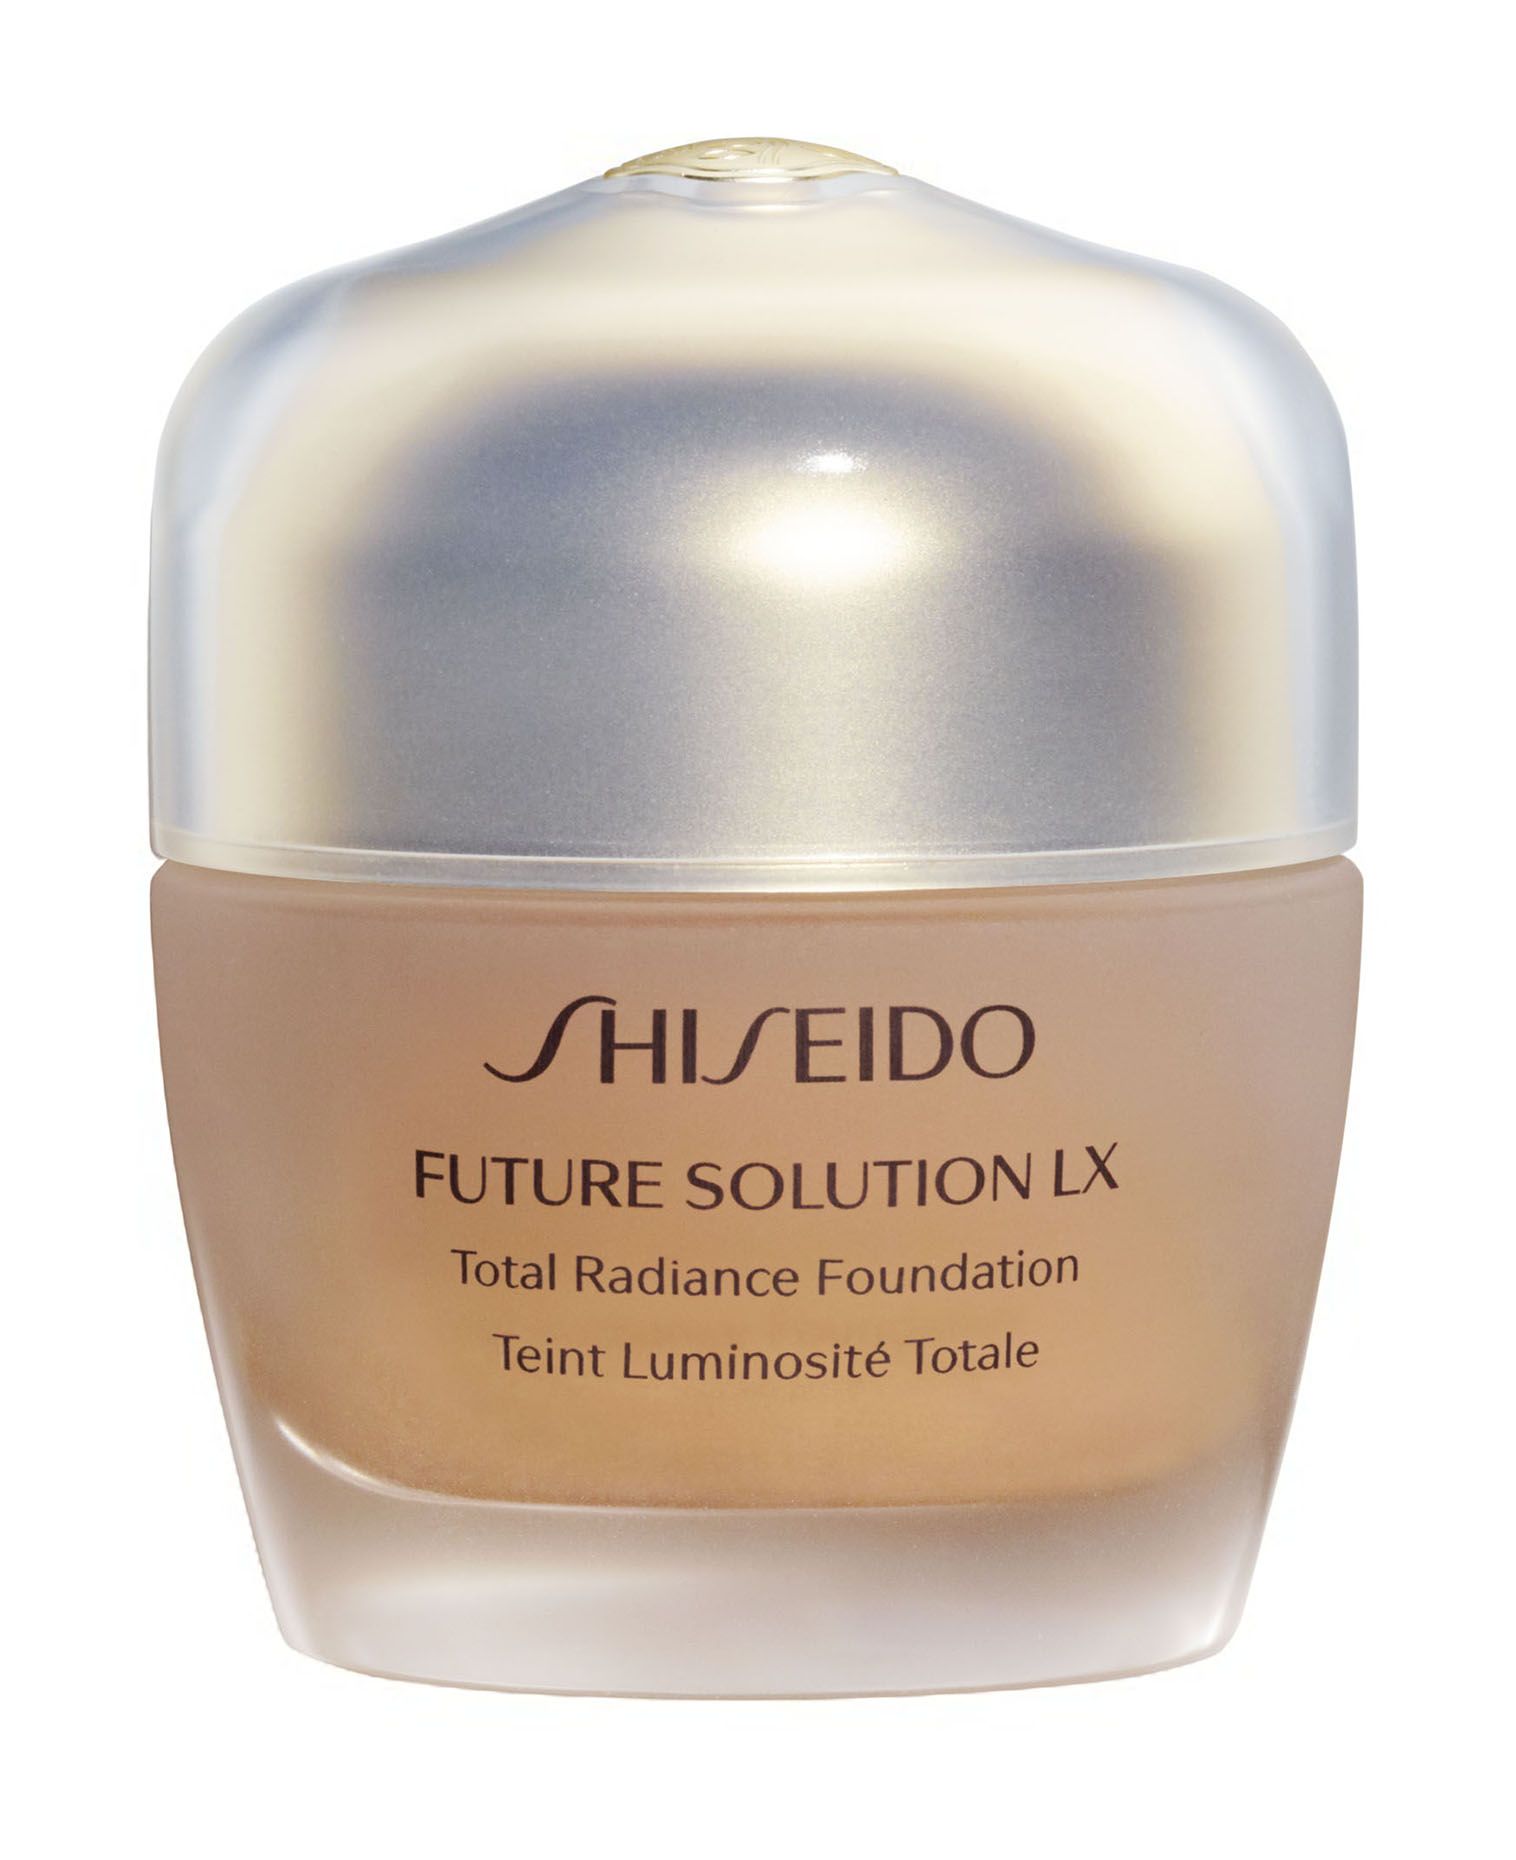 Shiseido тон. Шисейдо крем Future solution LX. Шисейдо тональный Future solution LX. Основа тональная Shiseido Future solution LX total Radiance Foundation spf15, Rose, №4. Тональный крем Shiseido Future solution LX тон Neutral.